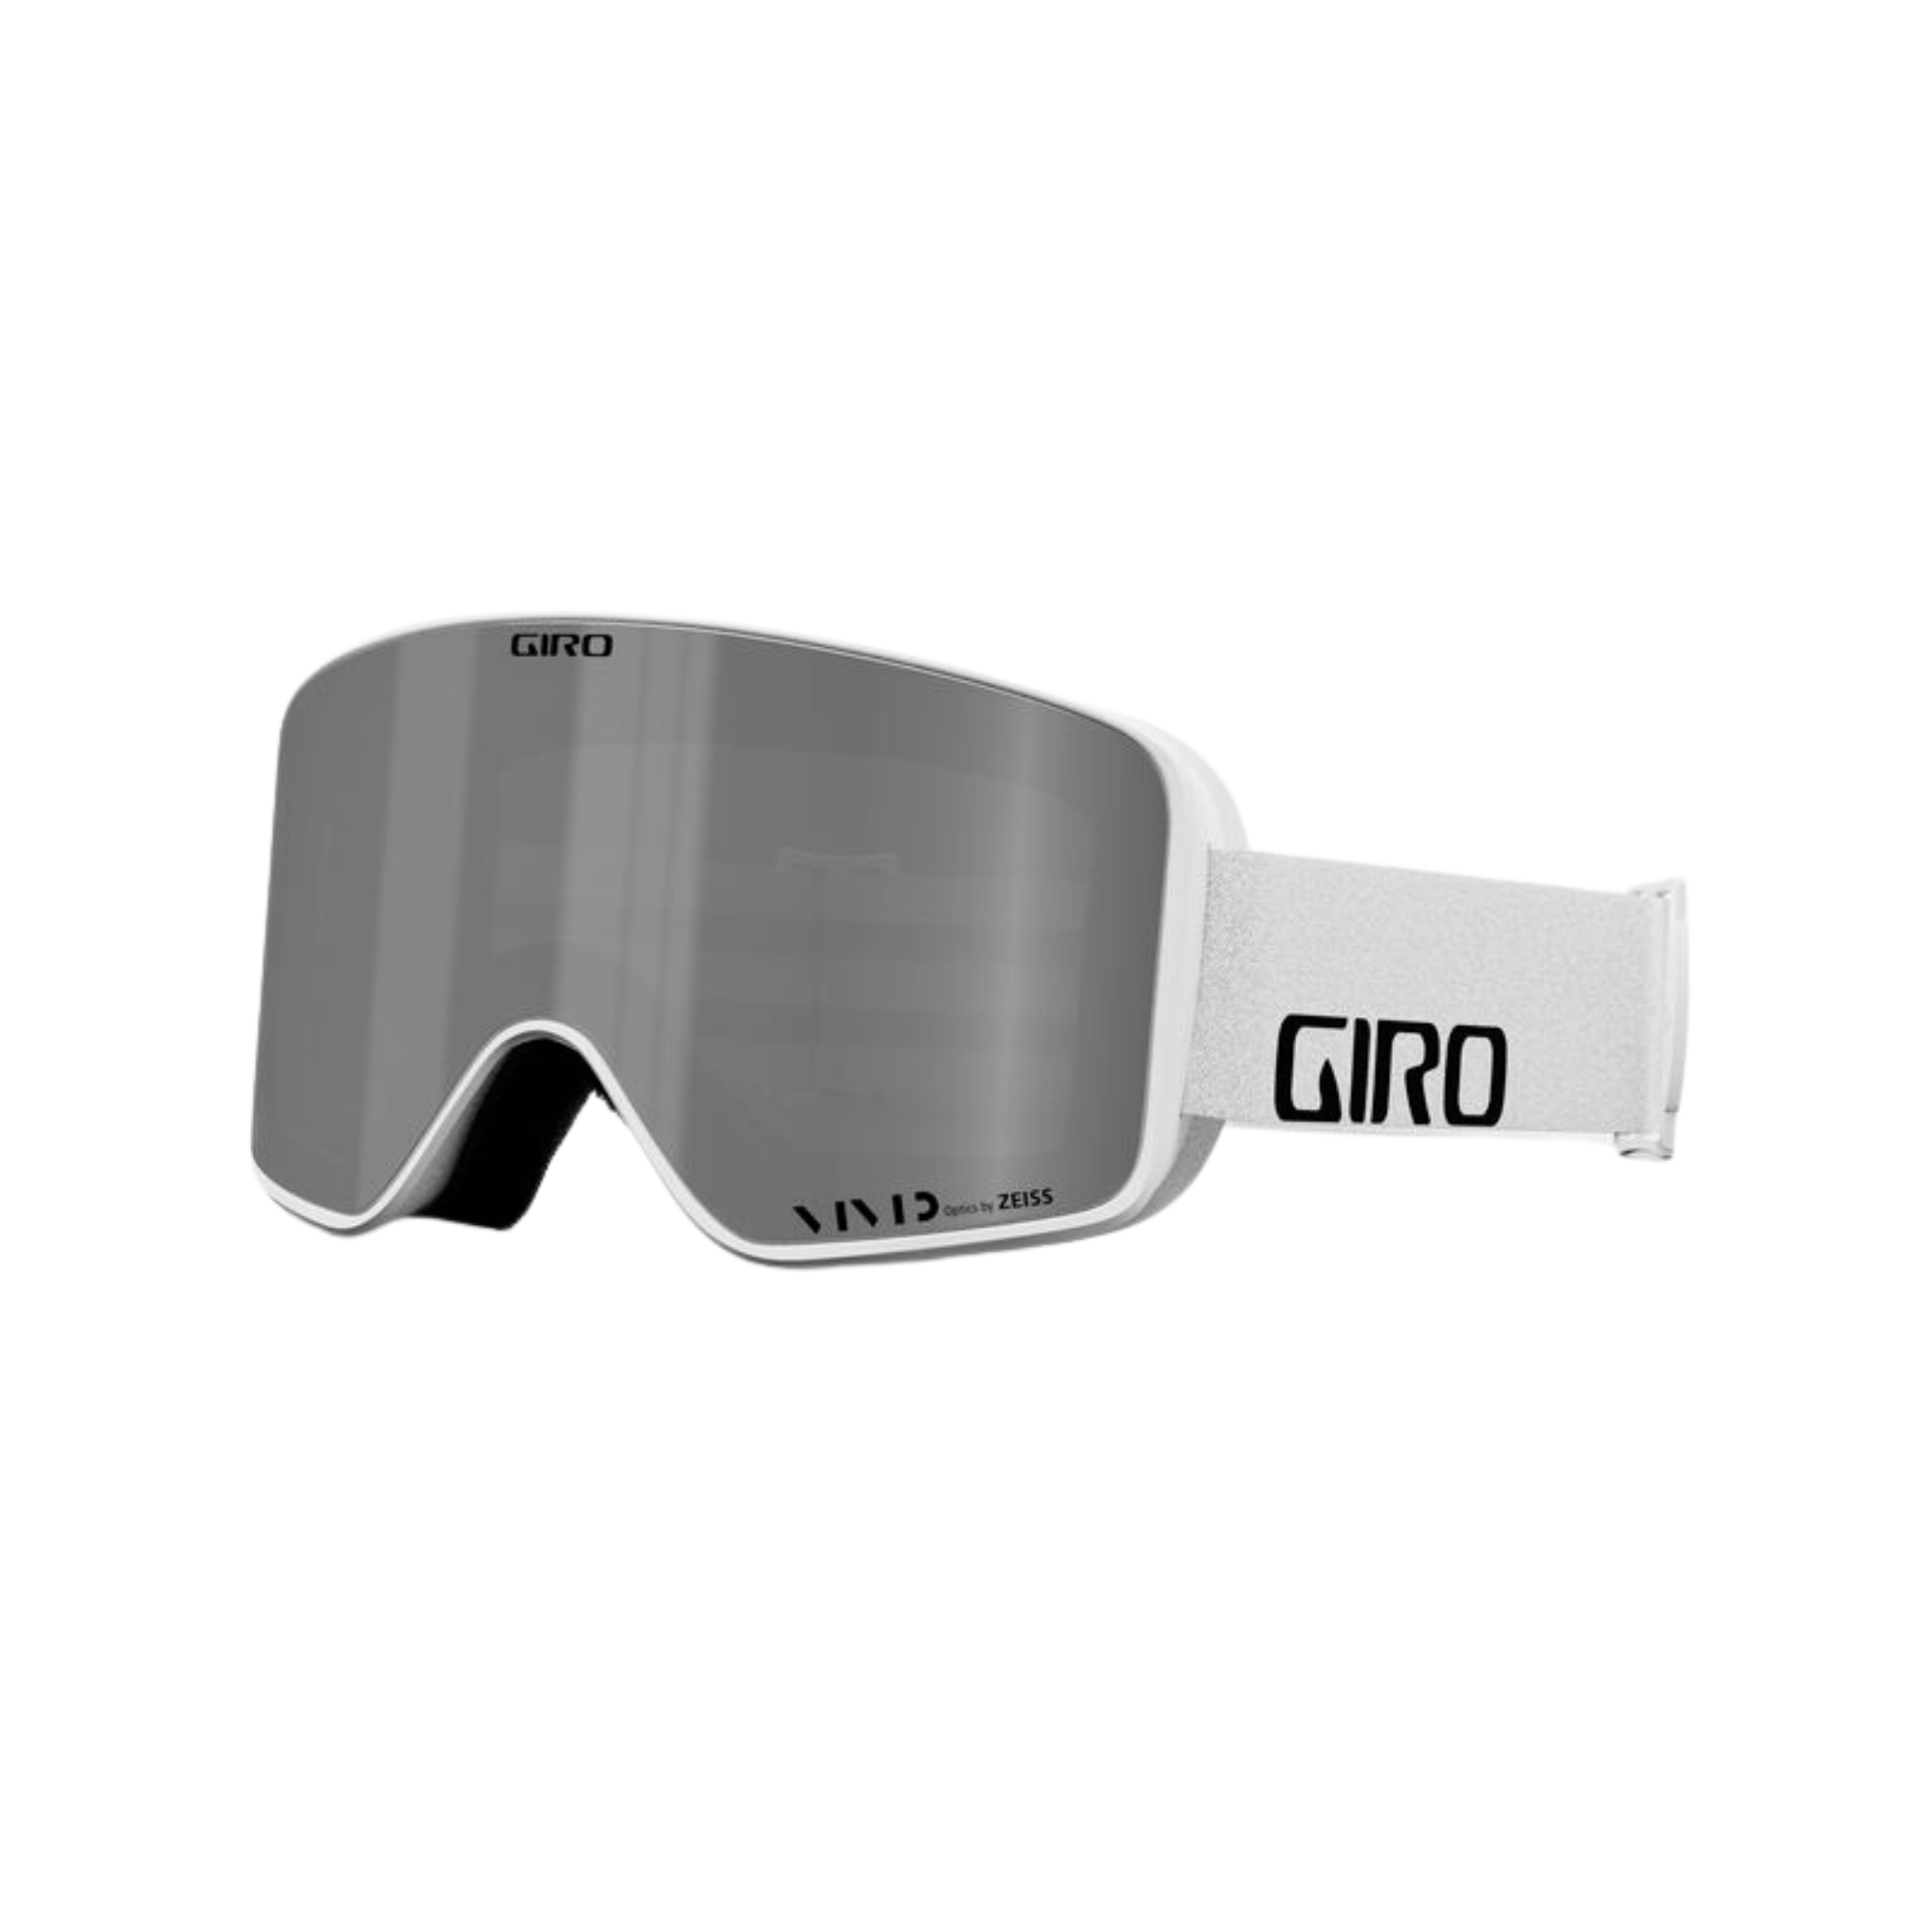 Giro Method - Asian Fit - White Wordmark - Vivid Onyx + Vivid Infared